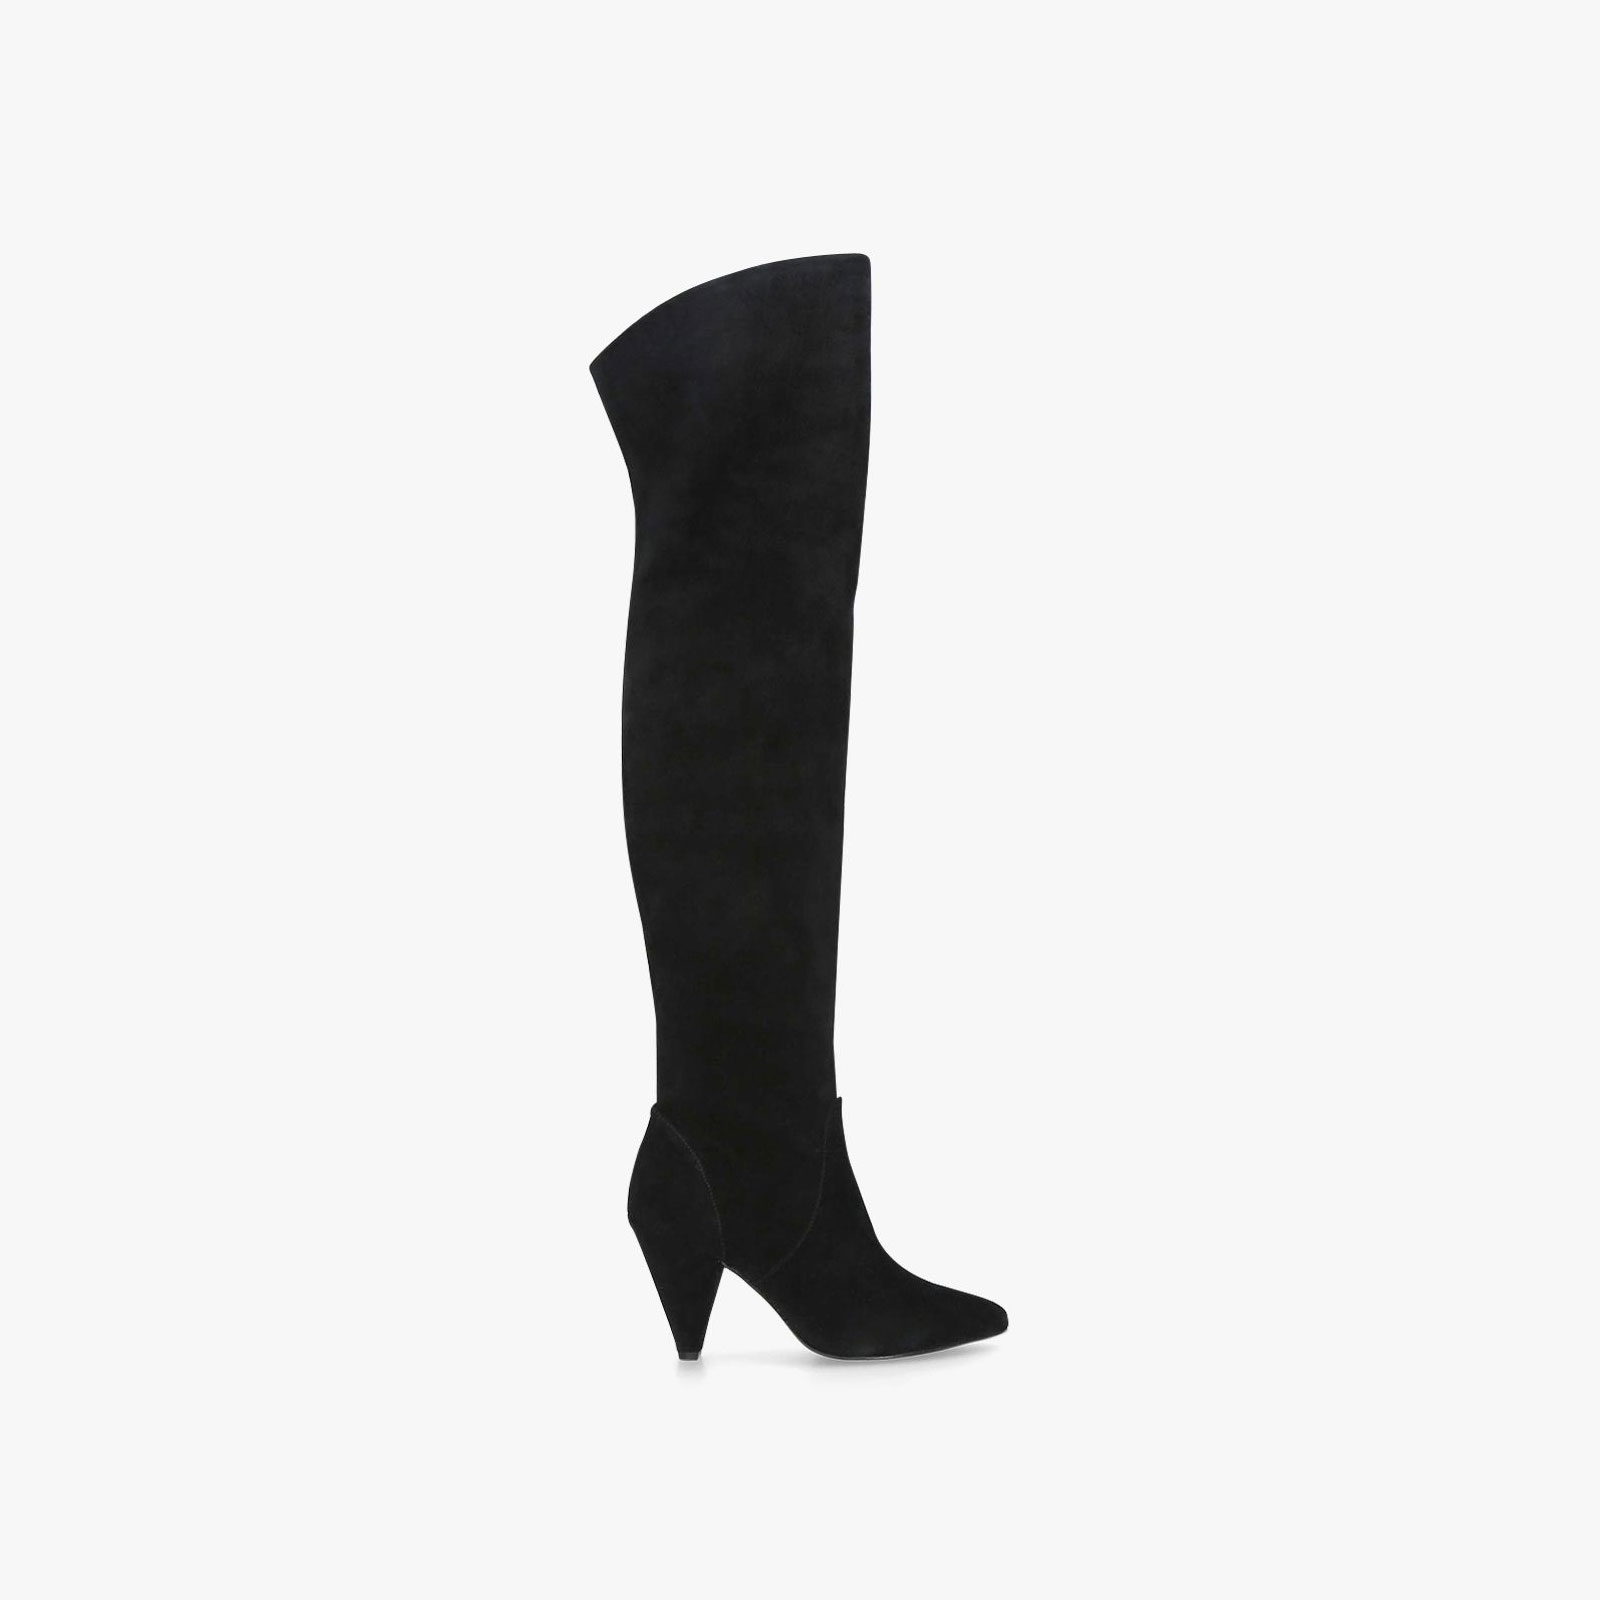 Kurt Geiger London Violet Womens Thigh High Over the Knee Boots Black Size 3-8 | eBay